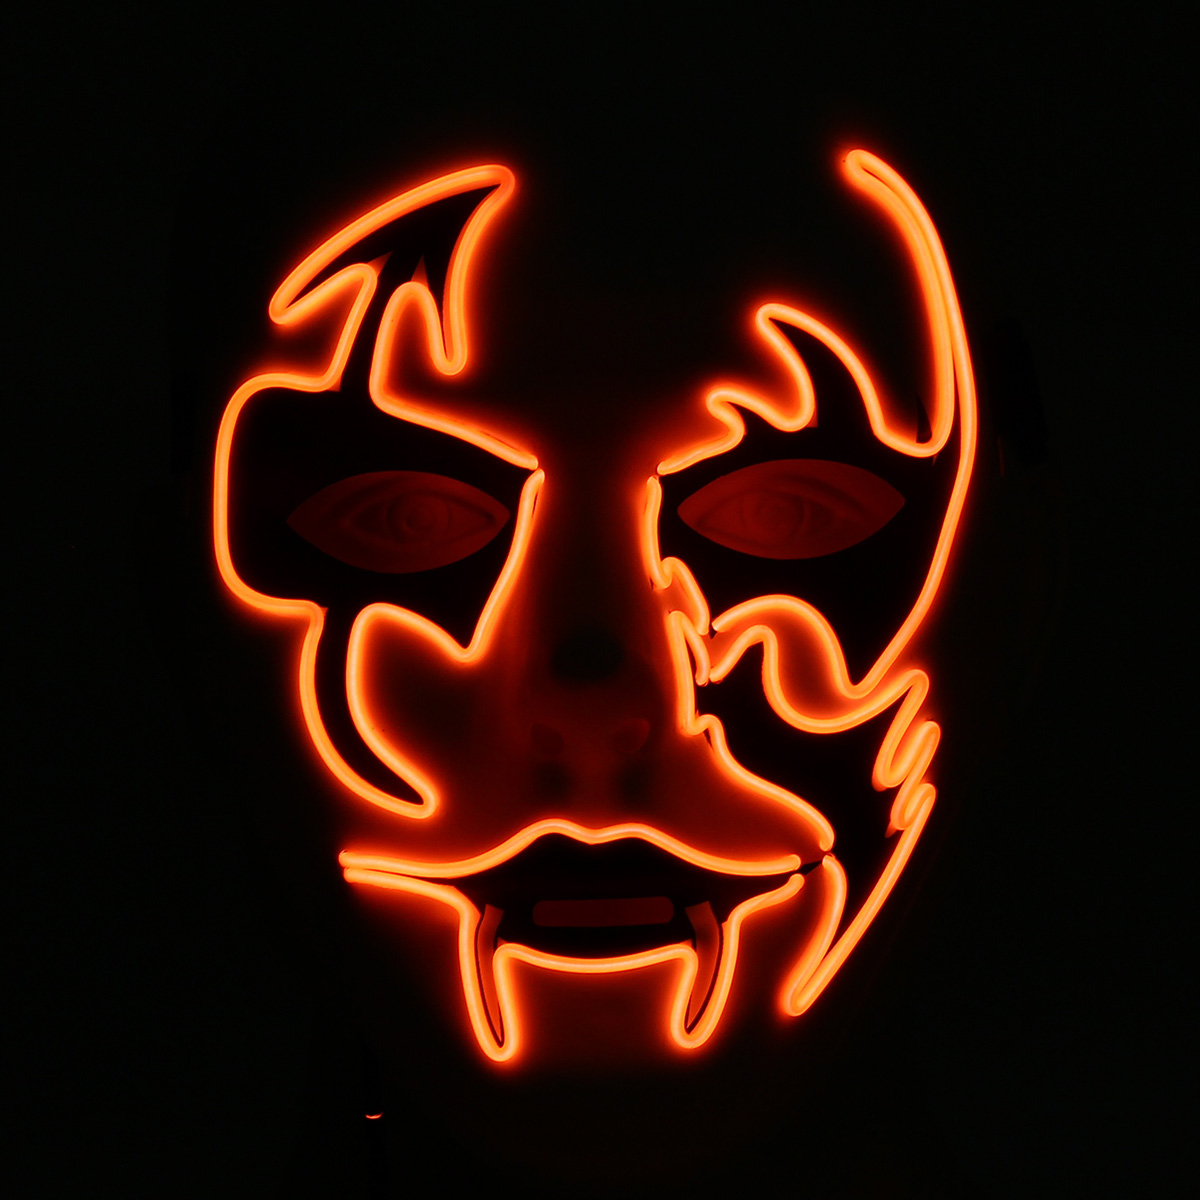 Halloween-Mask-LED-Luminous-Flashing-Face-Mask-Party-Masks-Light-Up-Dance-Halloween-Cosplay-1323529-4